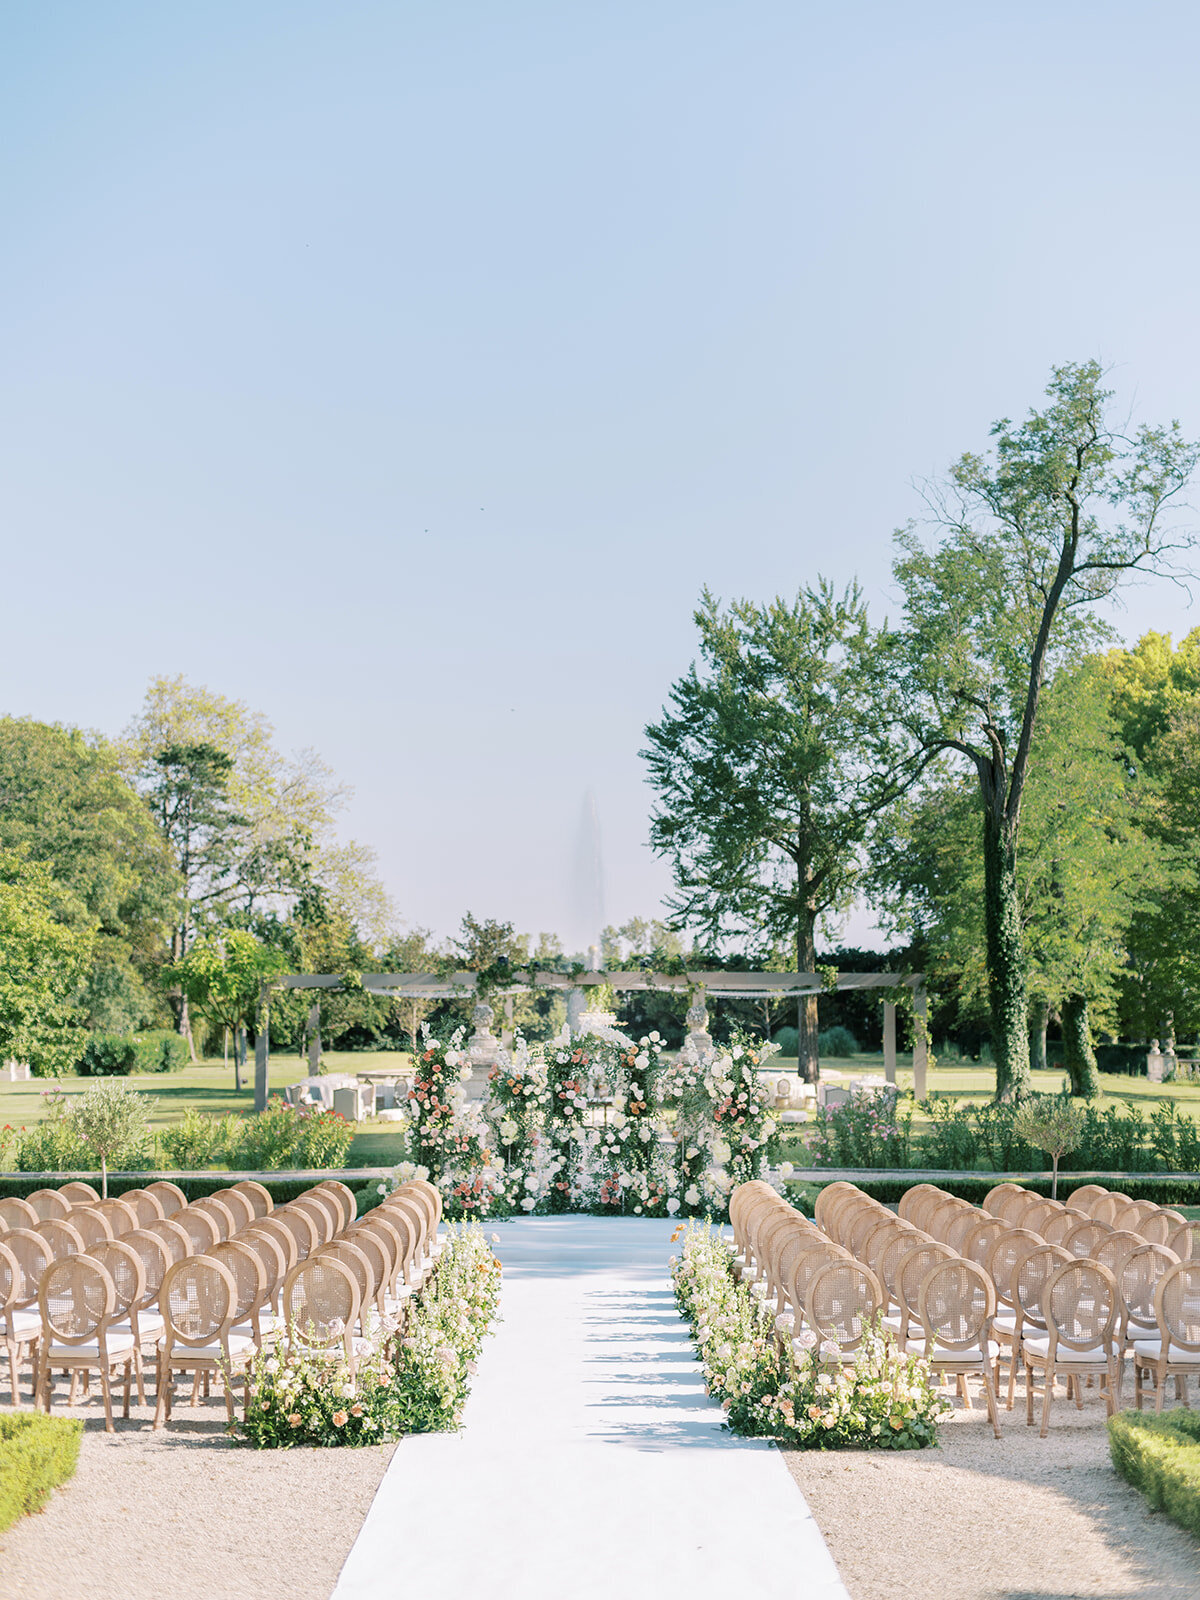 Chateau-de-Tourreau-France-wedding-by-Julia-Kaptelova_Photography-0163